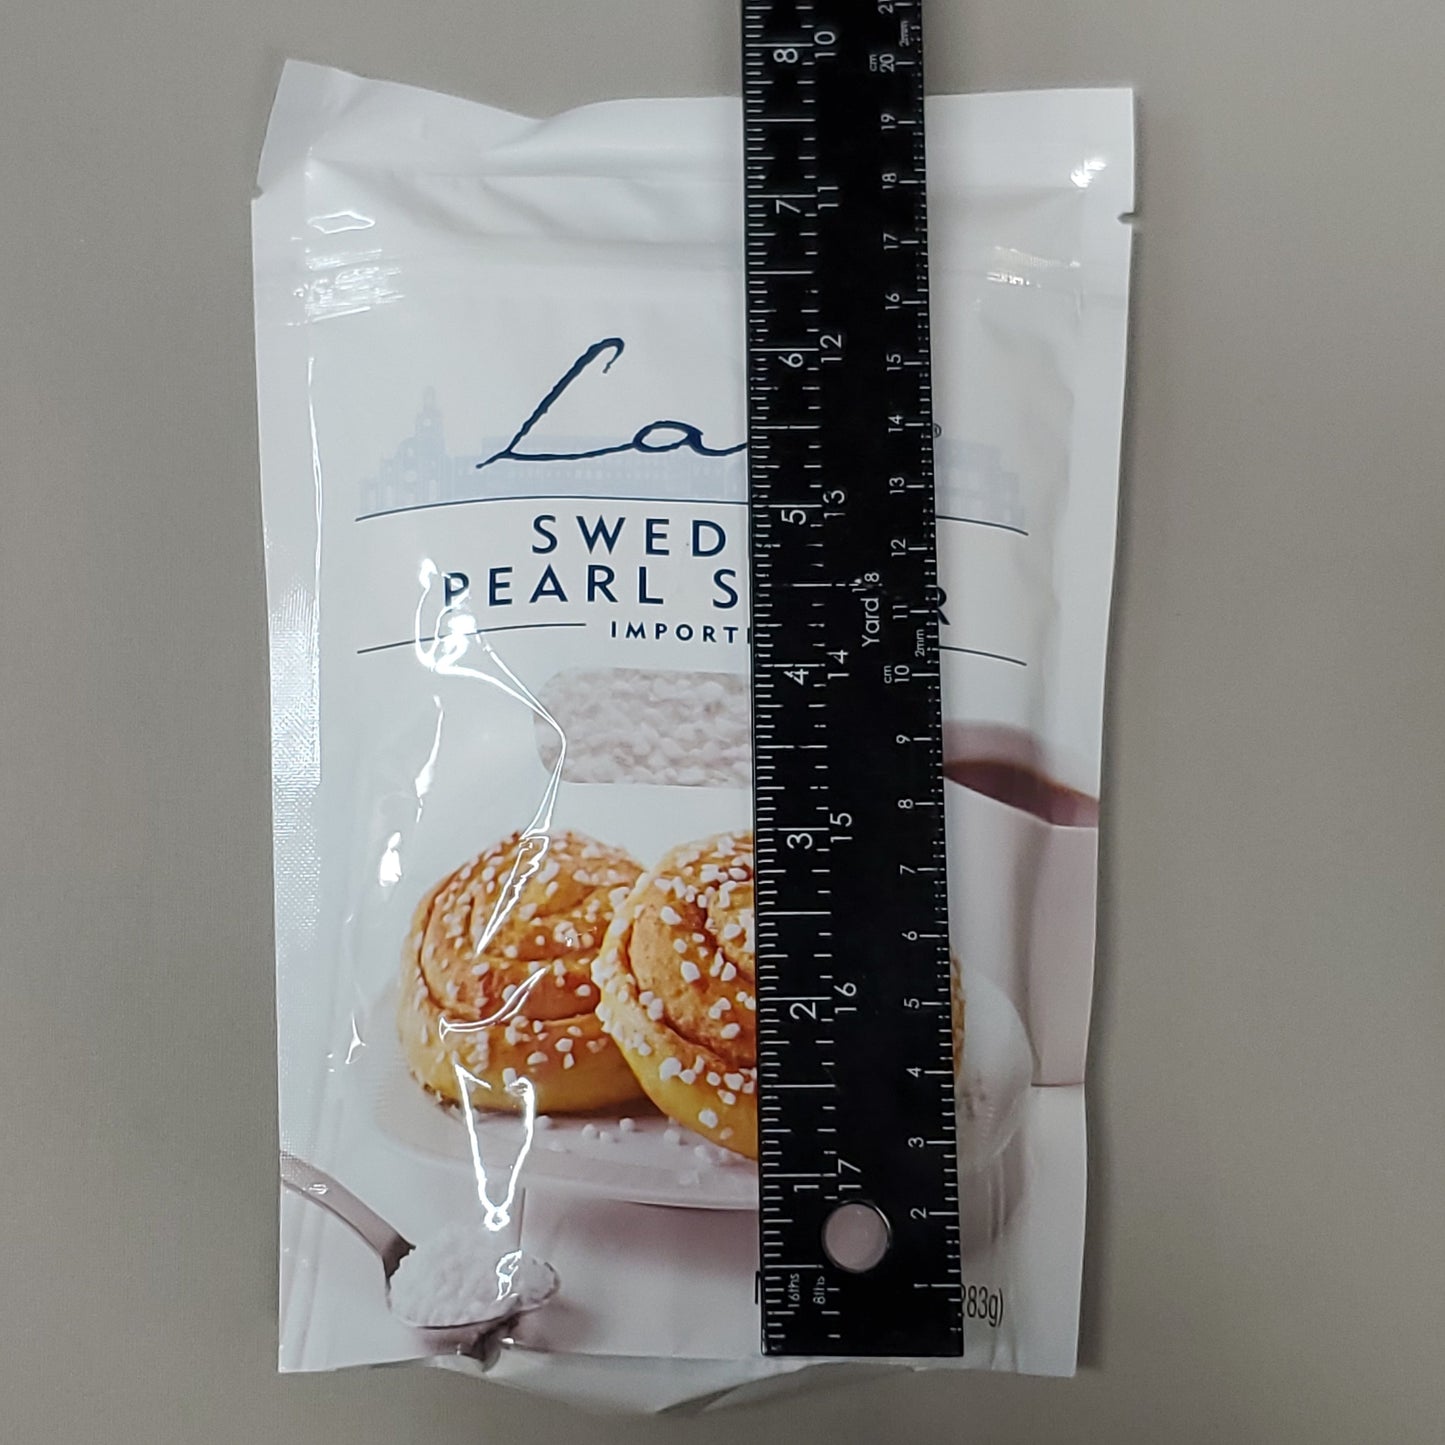 ZA@ LARS' OWN 6-PACK of Swedish Pearl Sugar Imported 10 oz (60 total oz) BB 02/24 (New) B